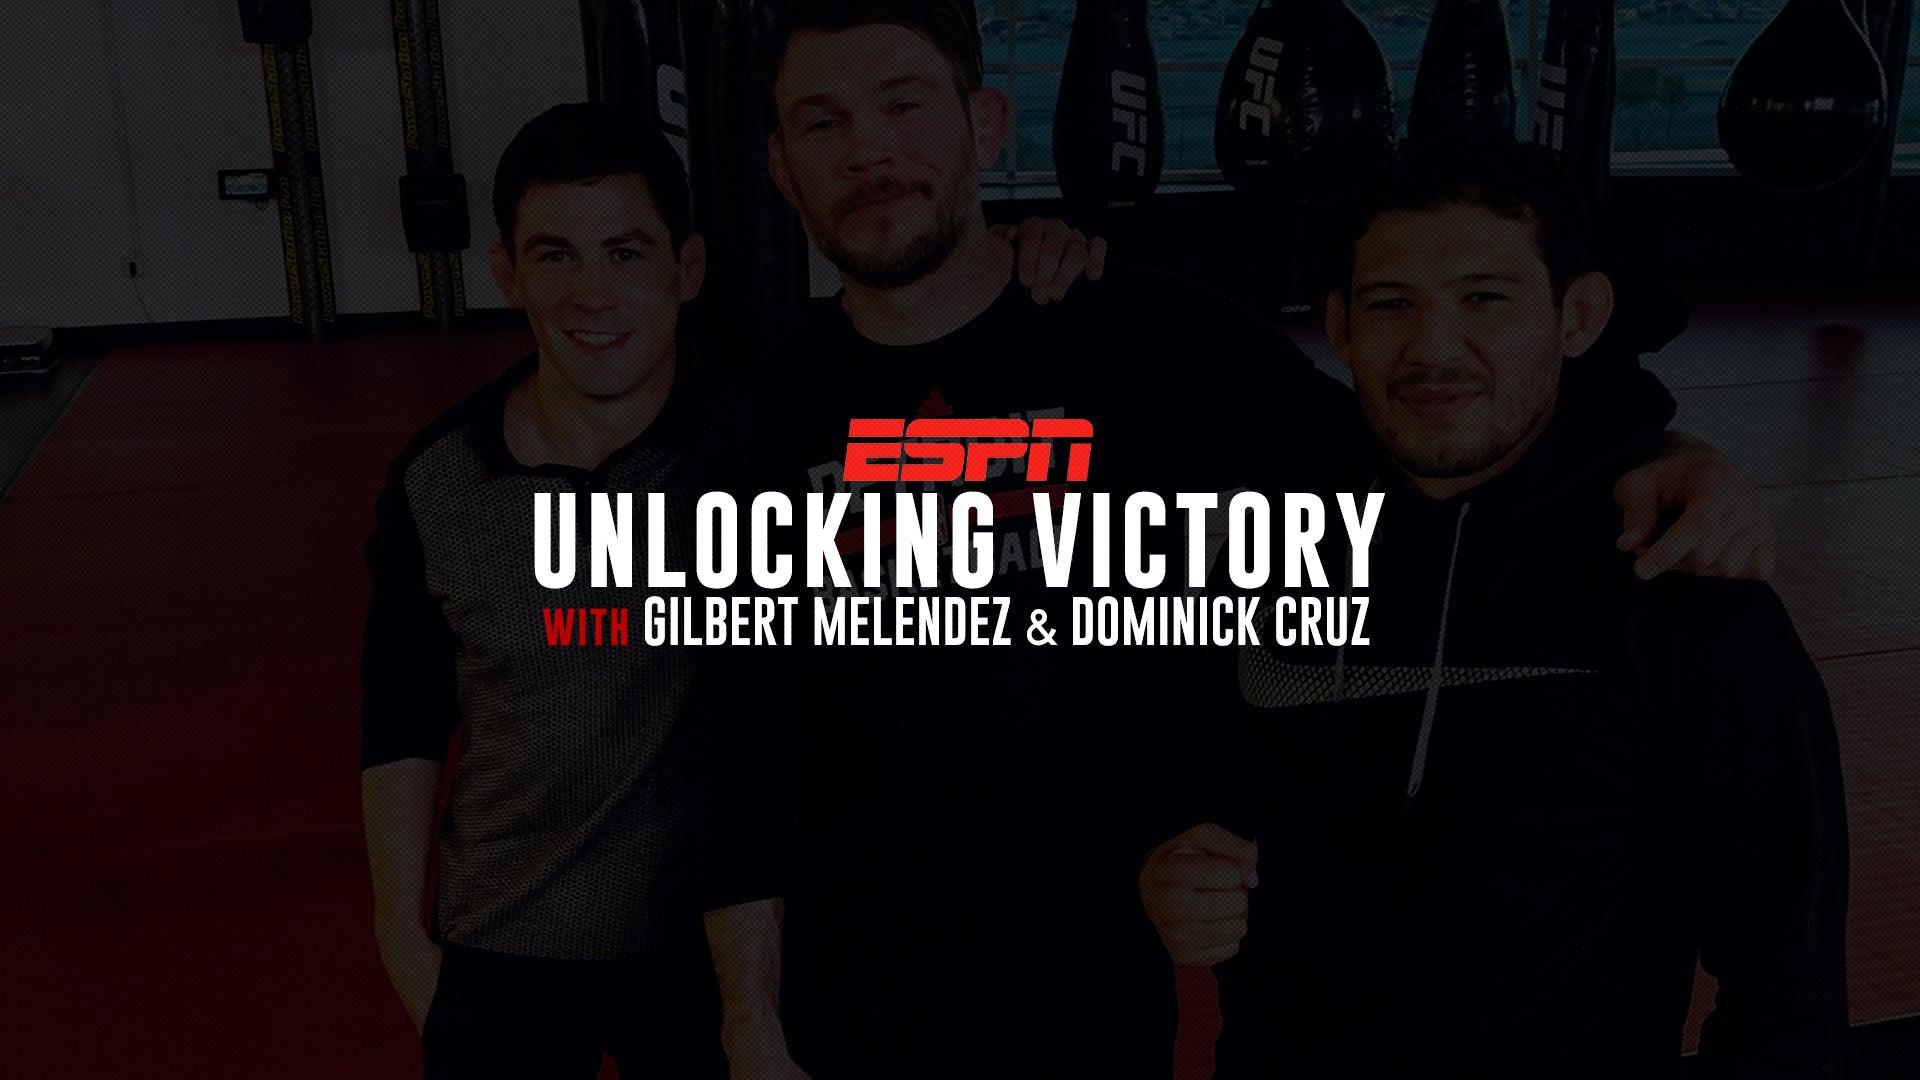 Gilbert Melendez New Show on ESPN 'Unlocking Victory' Starts Super Bowl Sunday - Represent Ltd.™